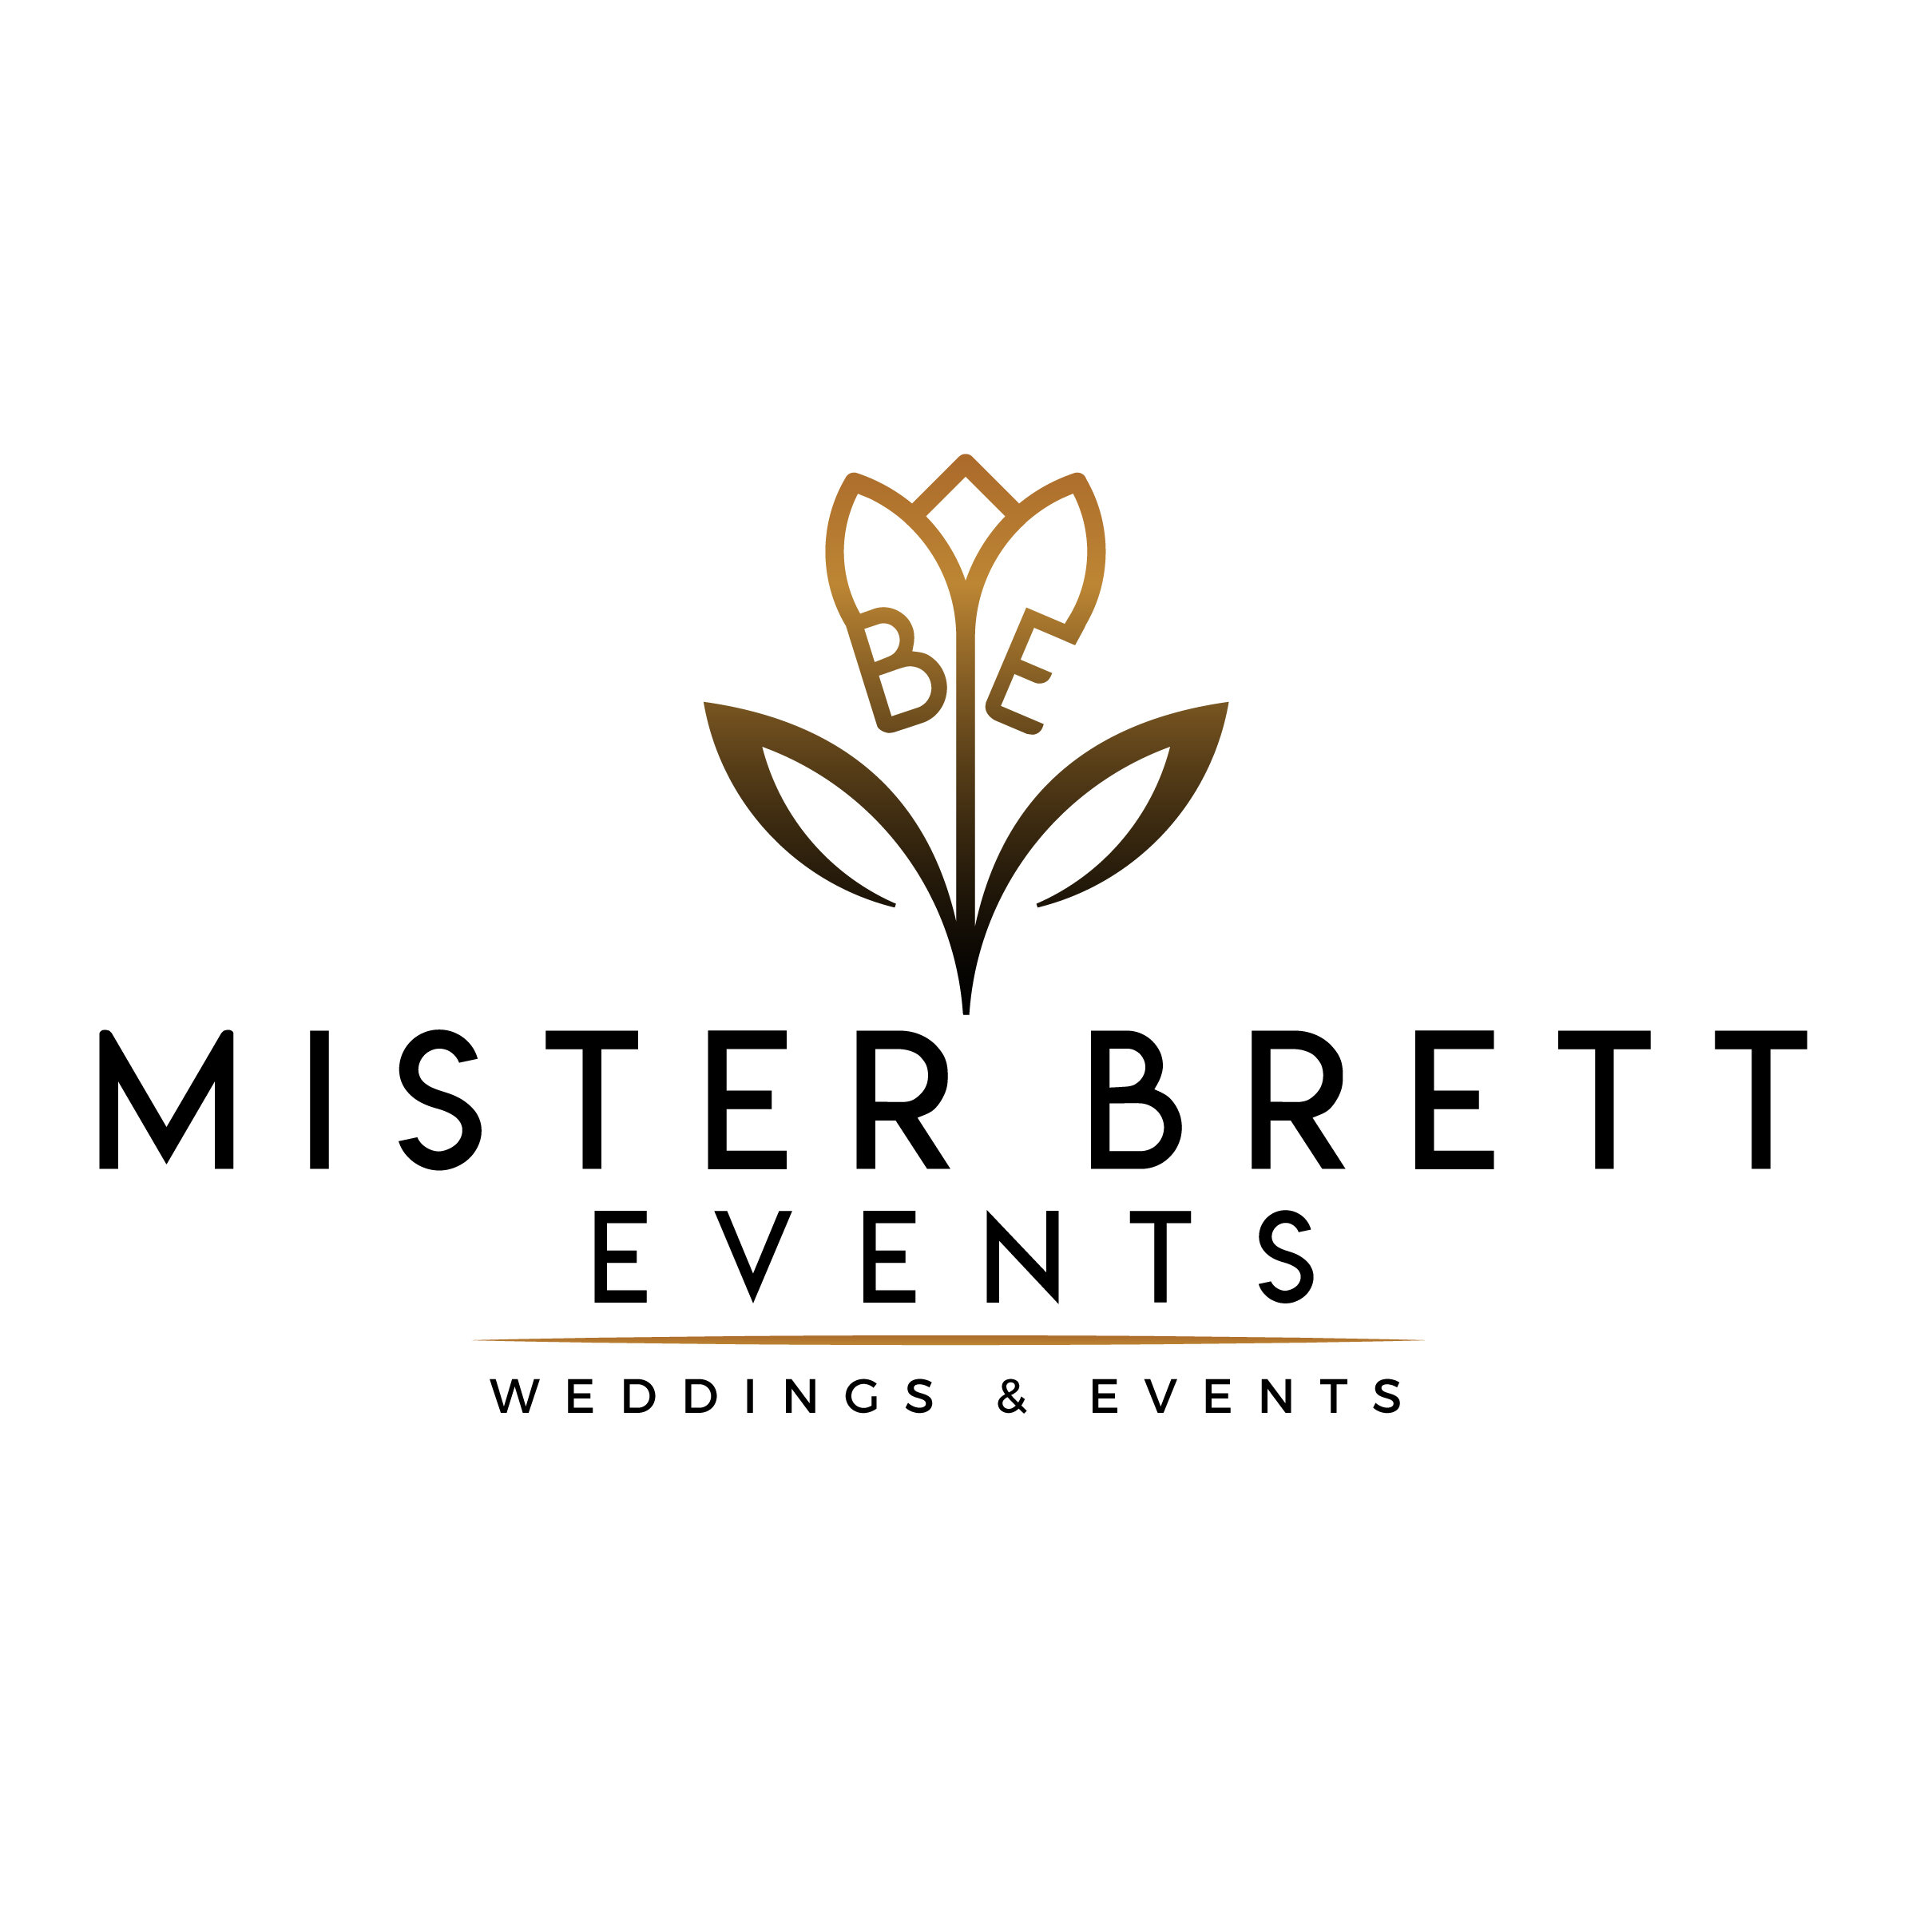 Mister Brett Events